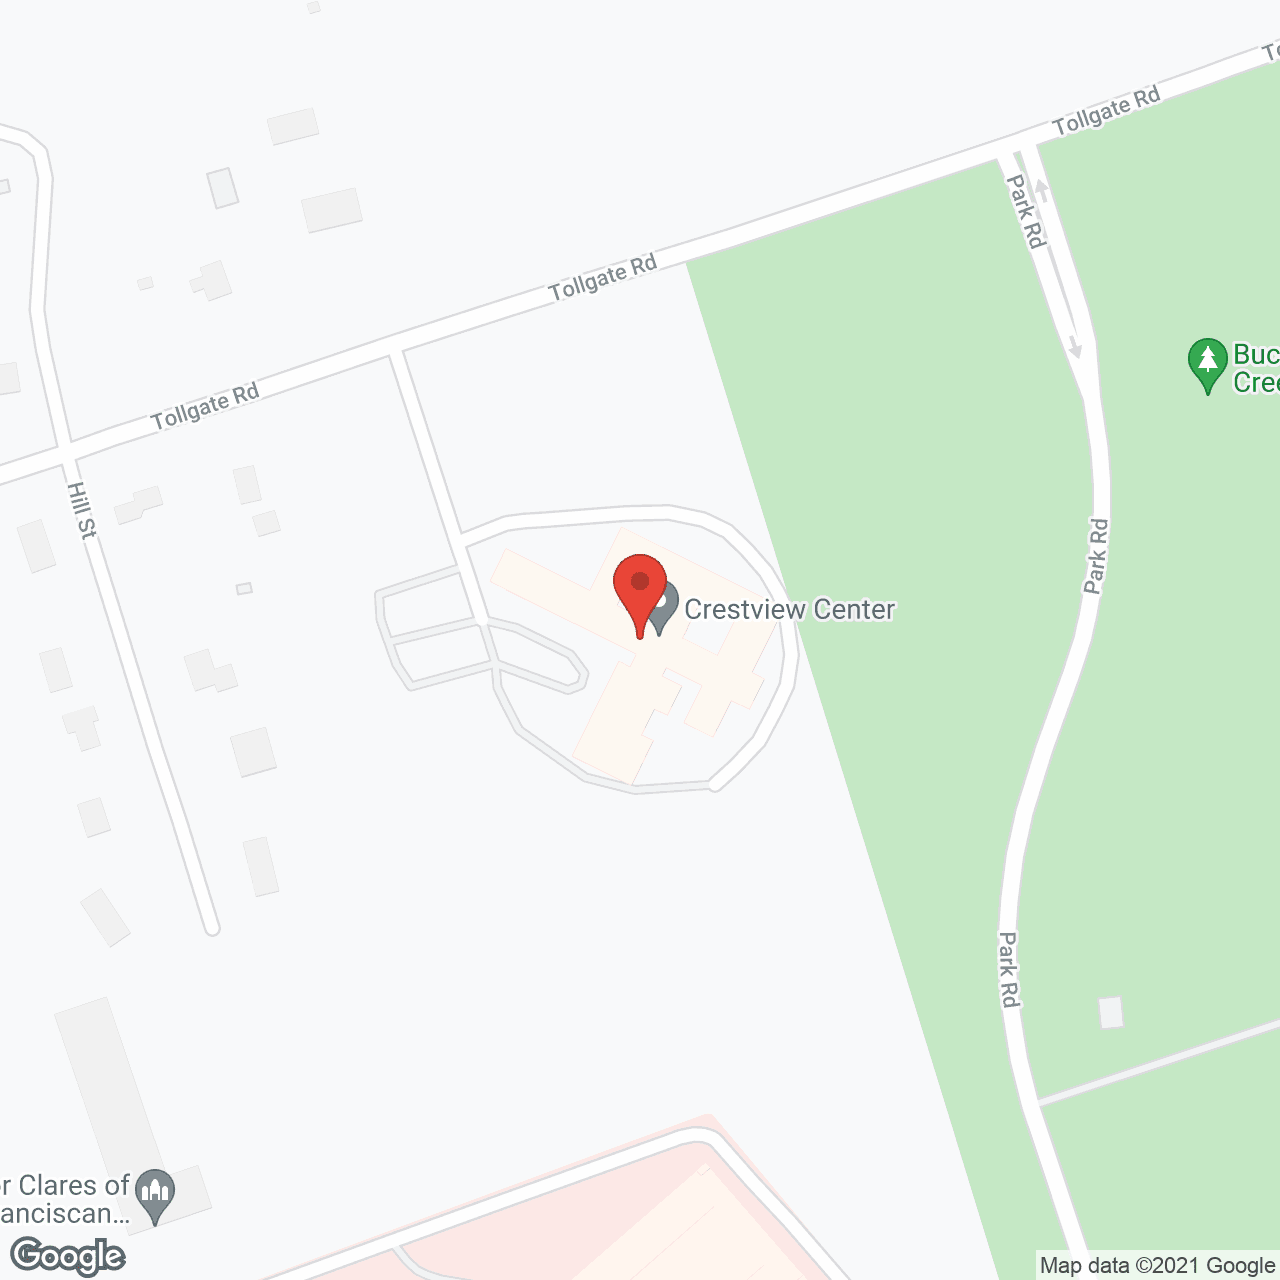 Crestview Center in google map